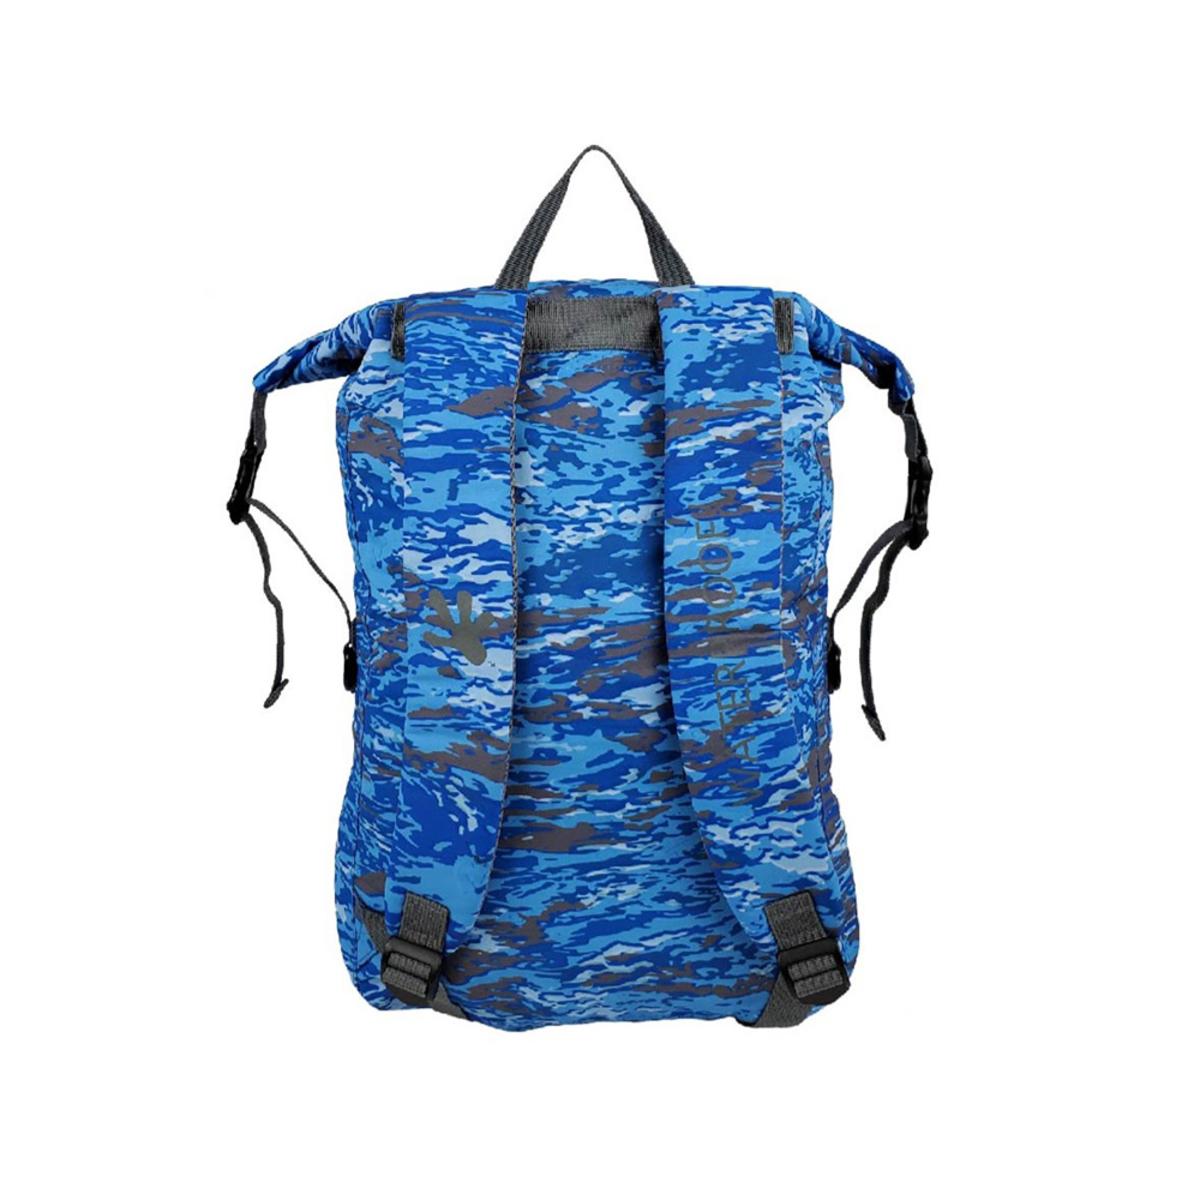 Geckobrands Endeavor 30L Lightweight Waterproof Backpack